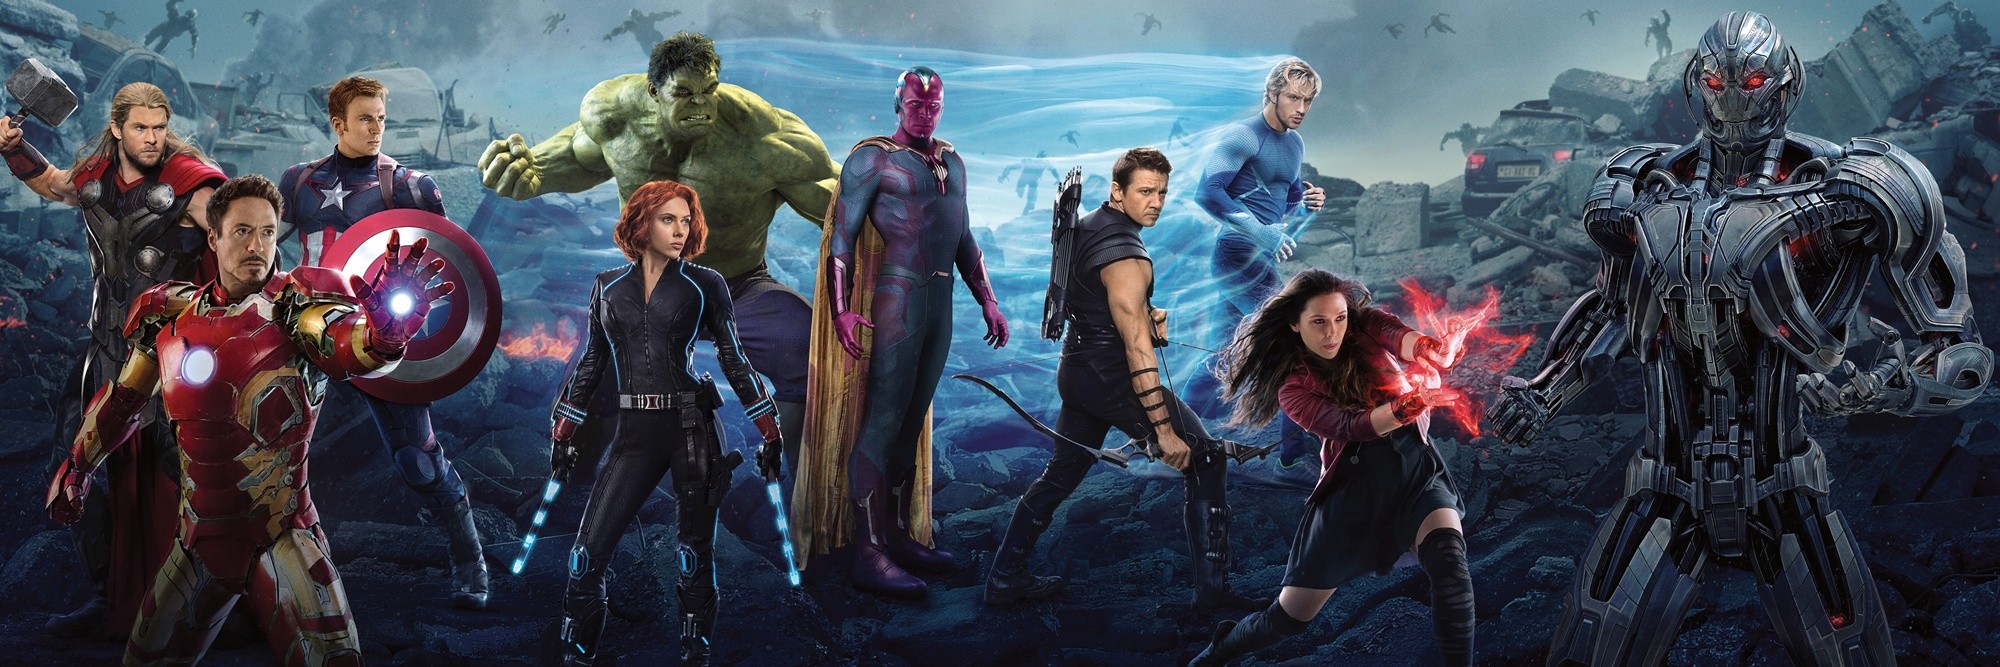 Chris Hemsworth, Robert Downey Jr., Chris Evans, Scarlett Johansson, Aaron Johnson and Elizabeth Olsen in Walt Disney Pictures' Avengers: Age of Ultron (2015)